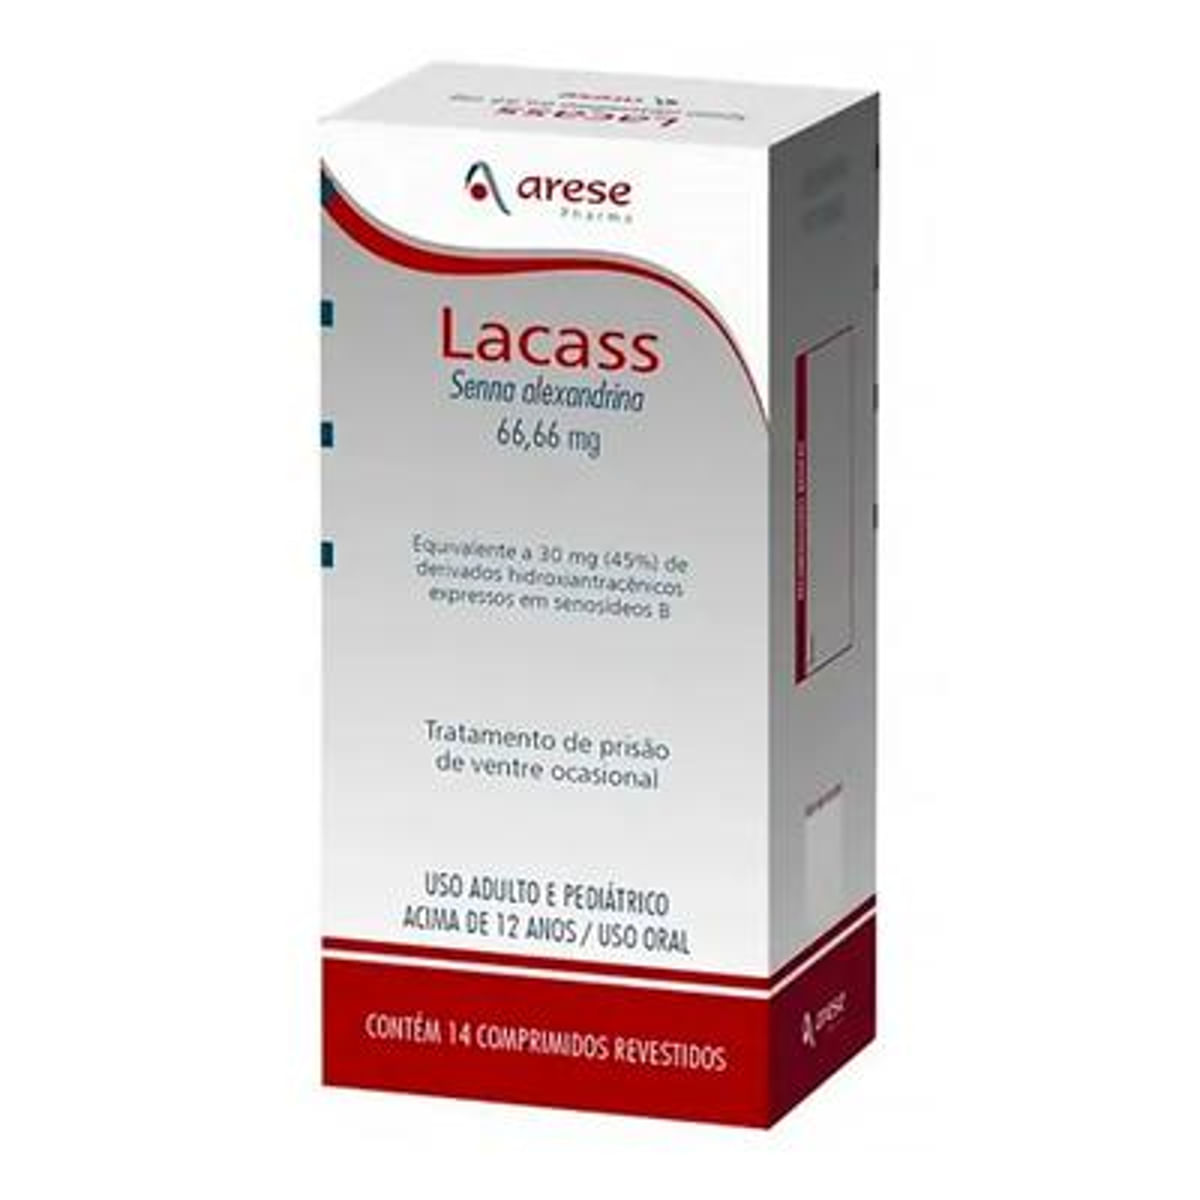 lacass-14-comprimidos-1.jpg